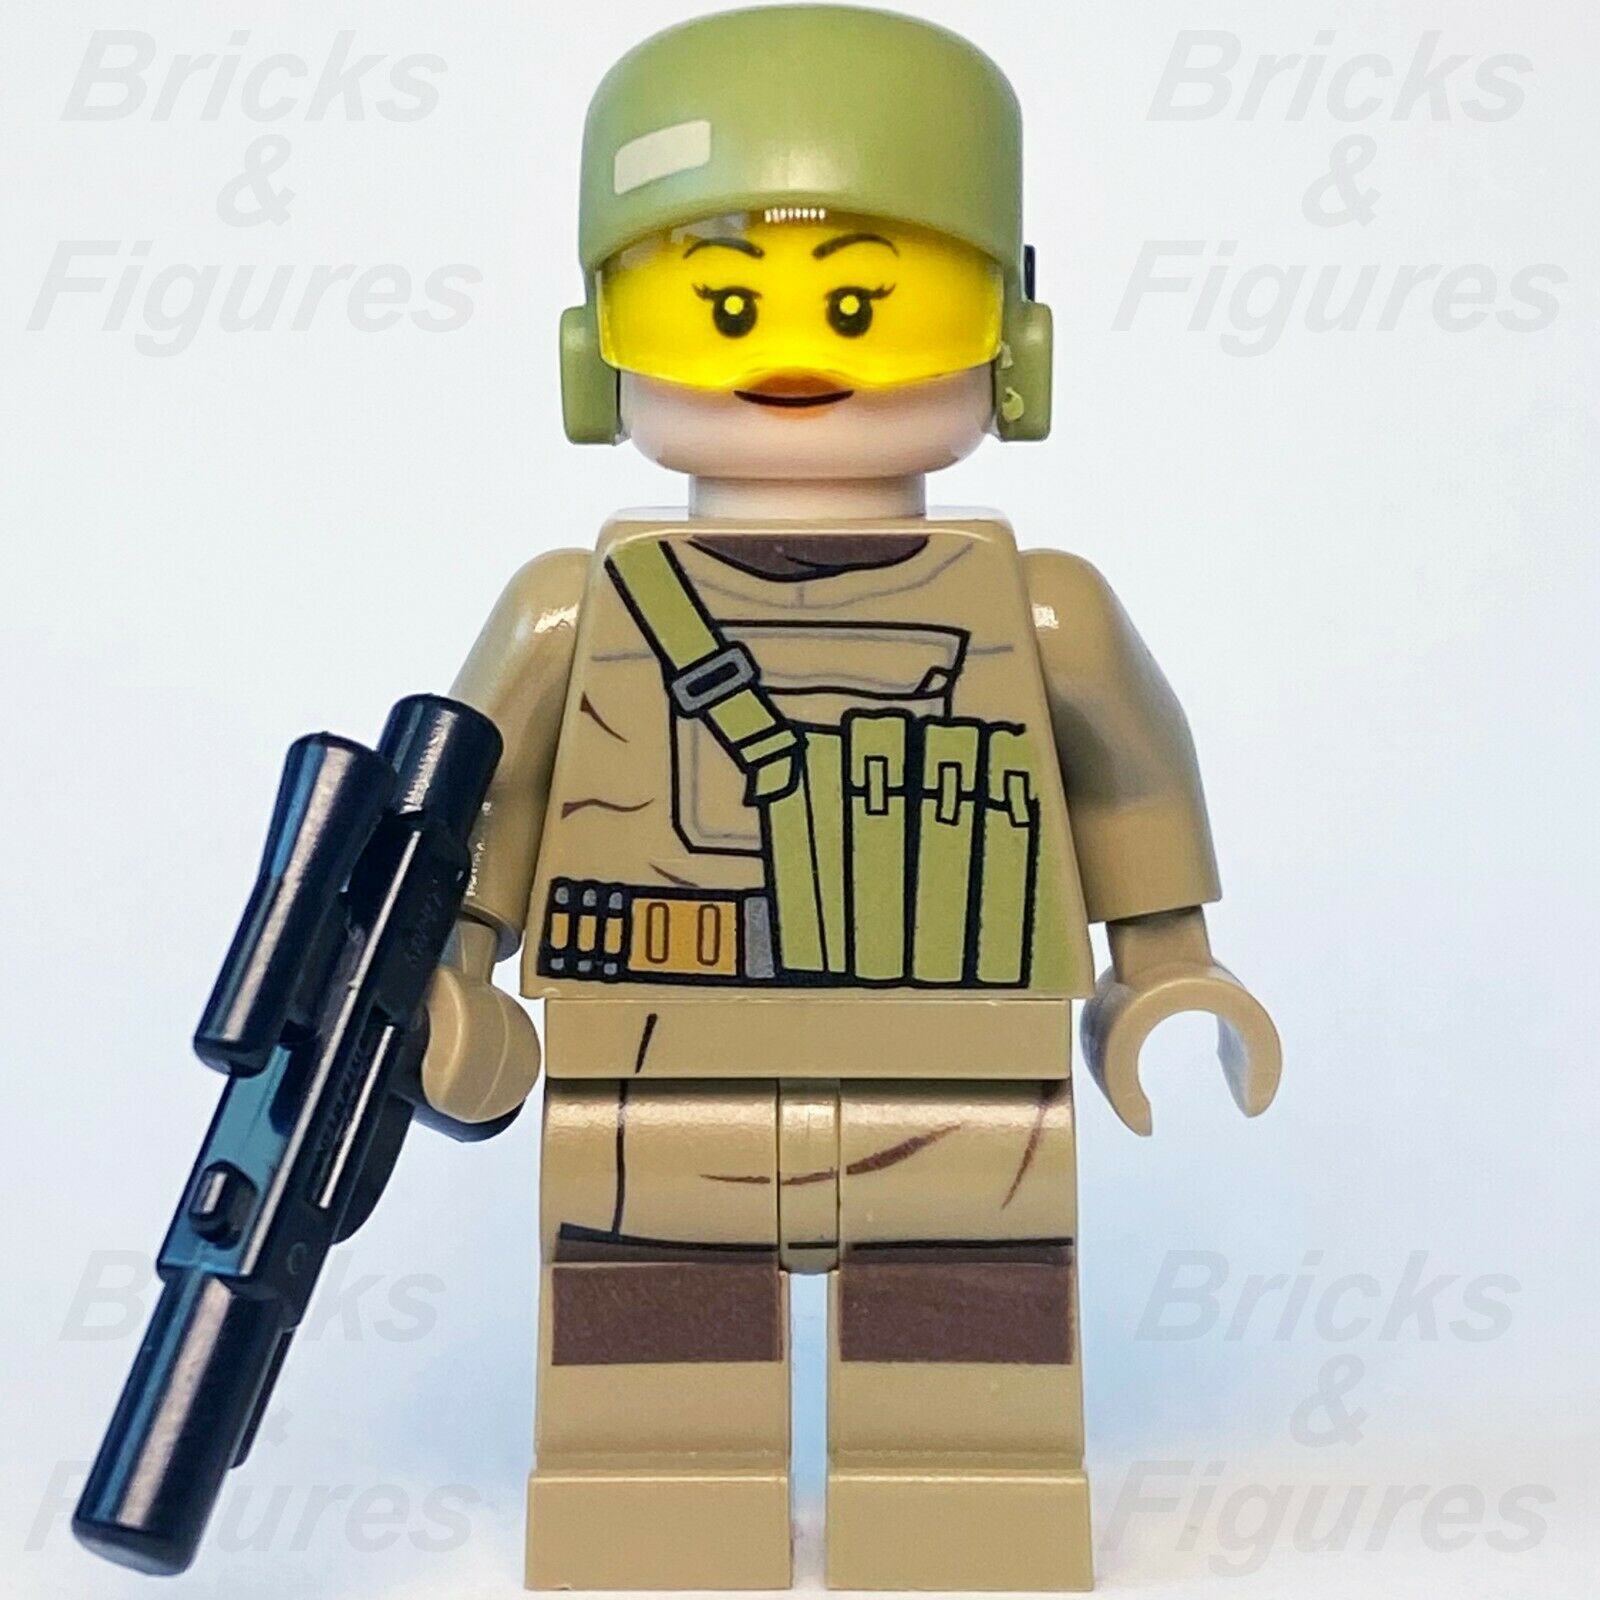 Star Wars LEGO Resistance Trooper Female Fighter The Last Jedi Minifigure 75177 - Bricks & Figures